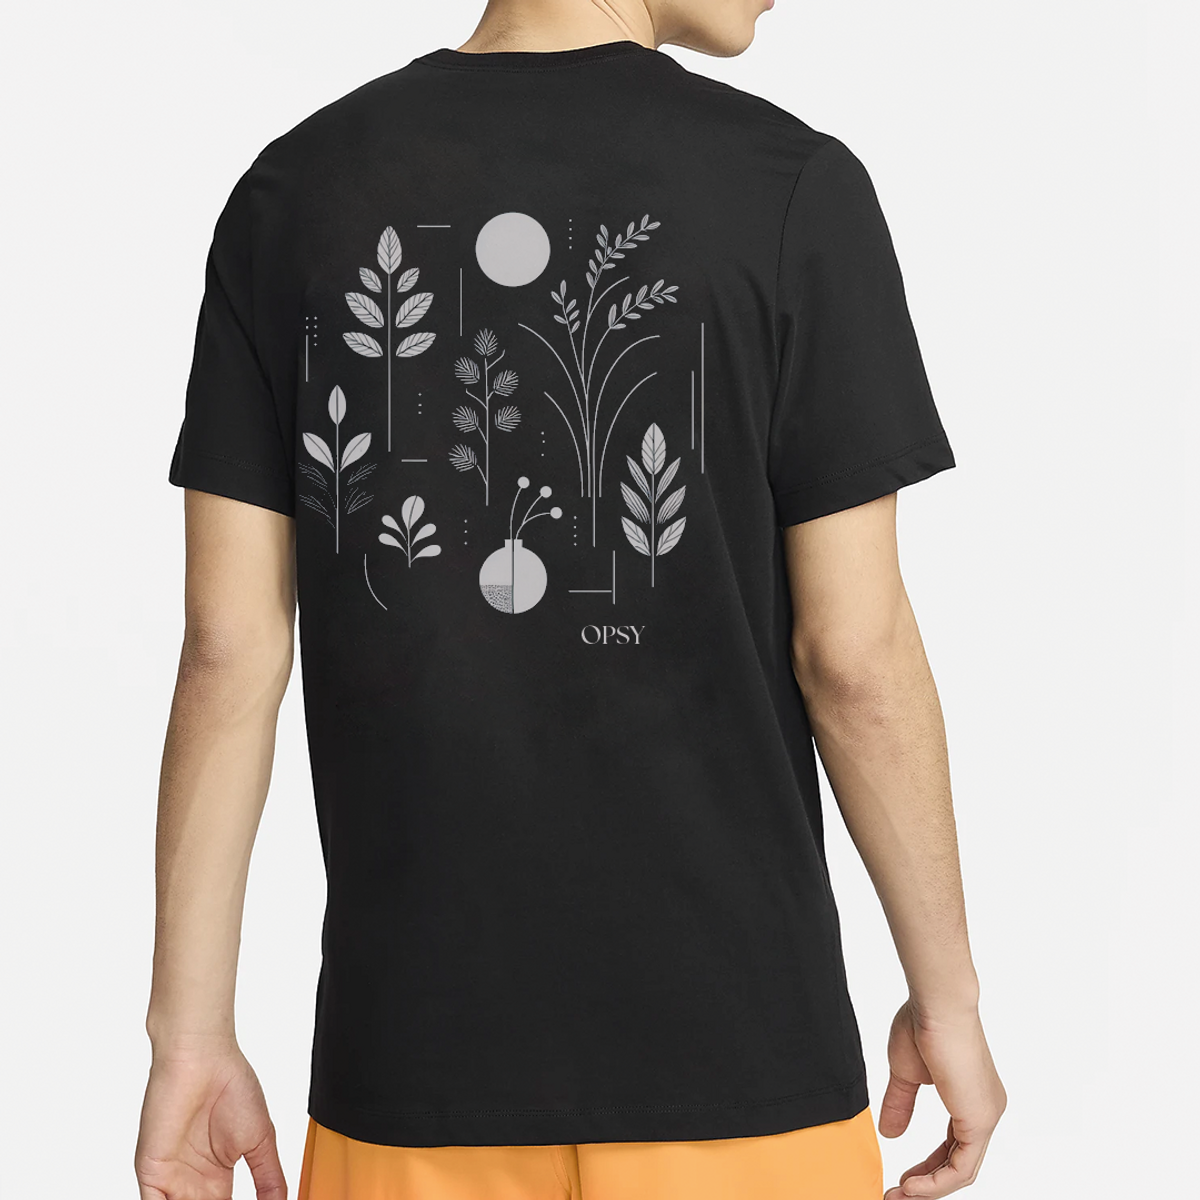 Nome do produto: T-Shirt Plants